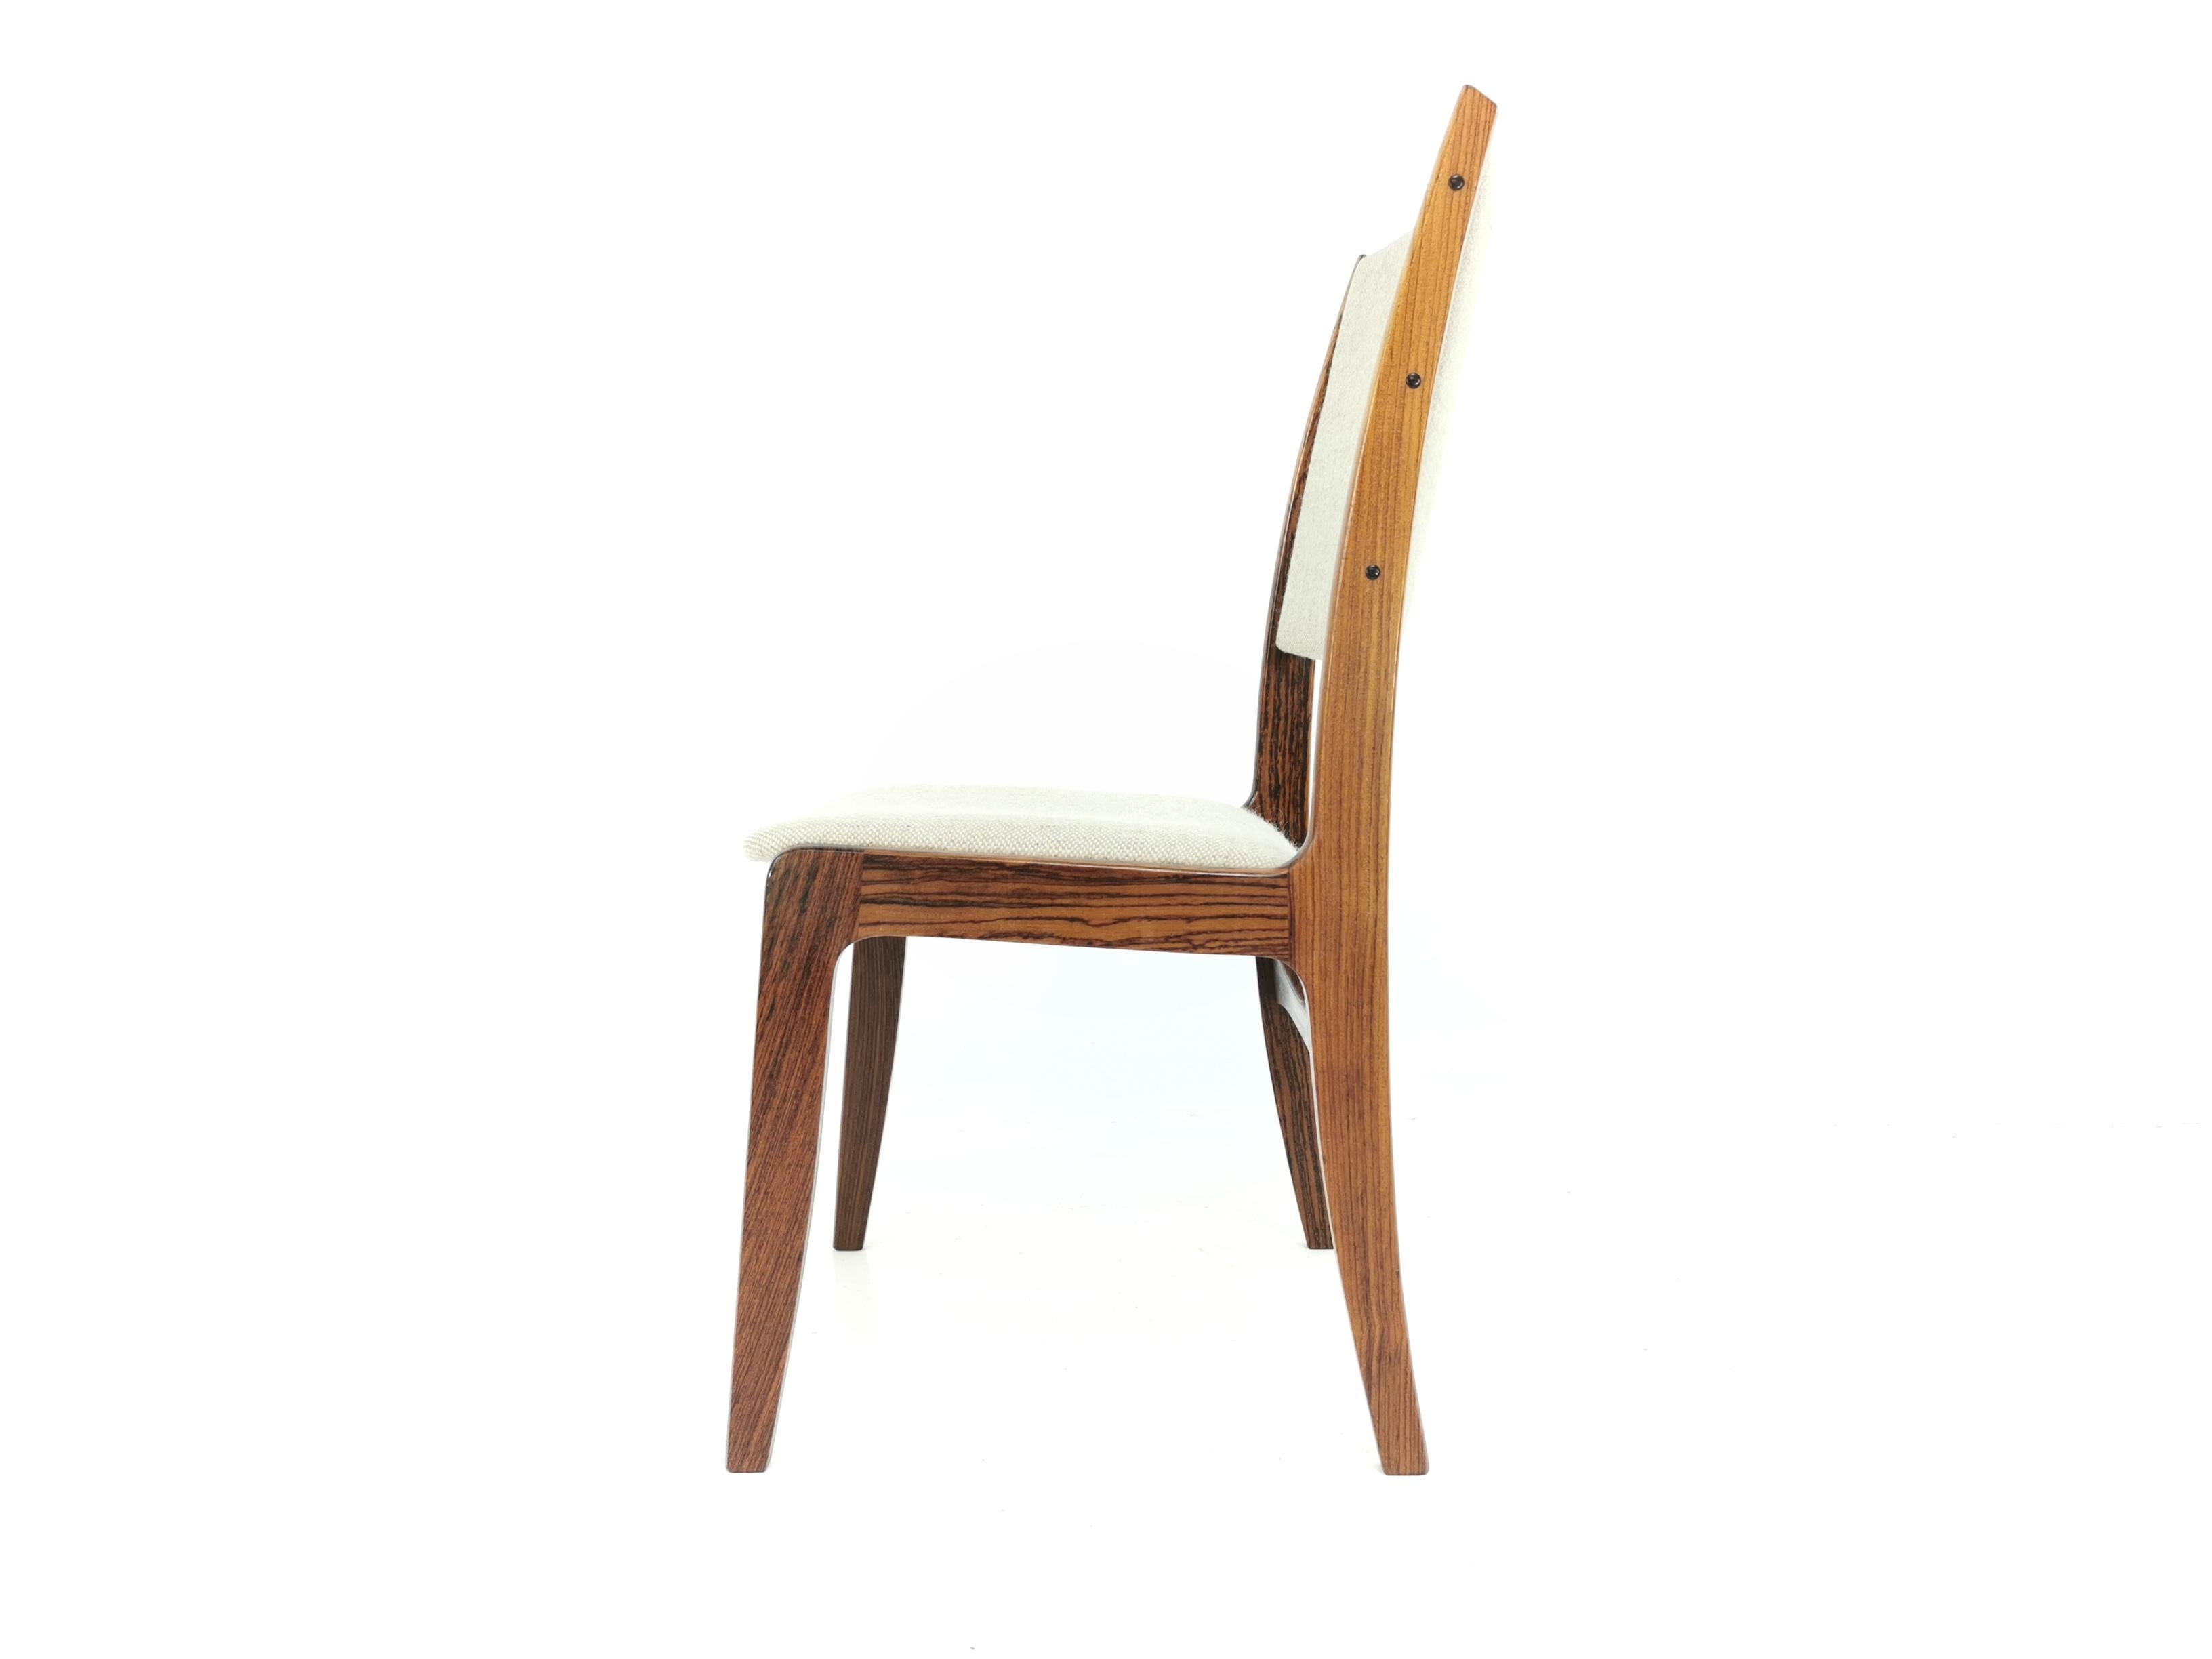 20th Century Danish Johannes Andersen Rosewood Vintage Dining Chairs Midcentury